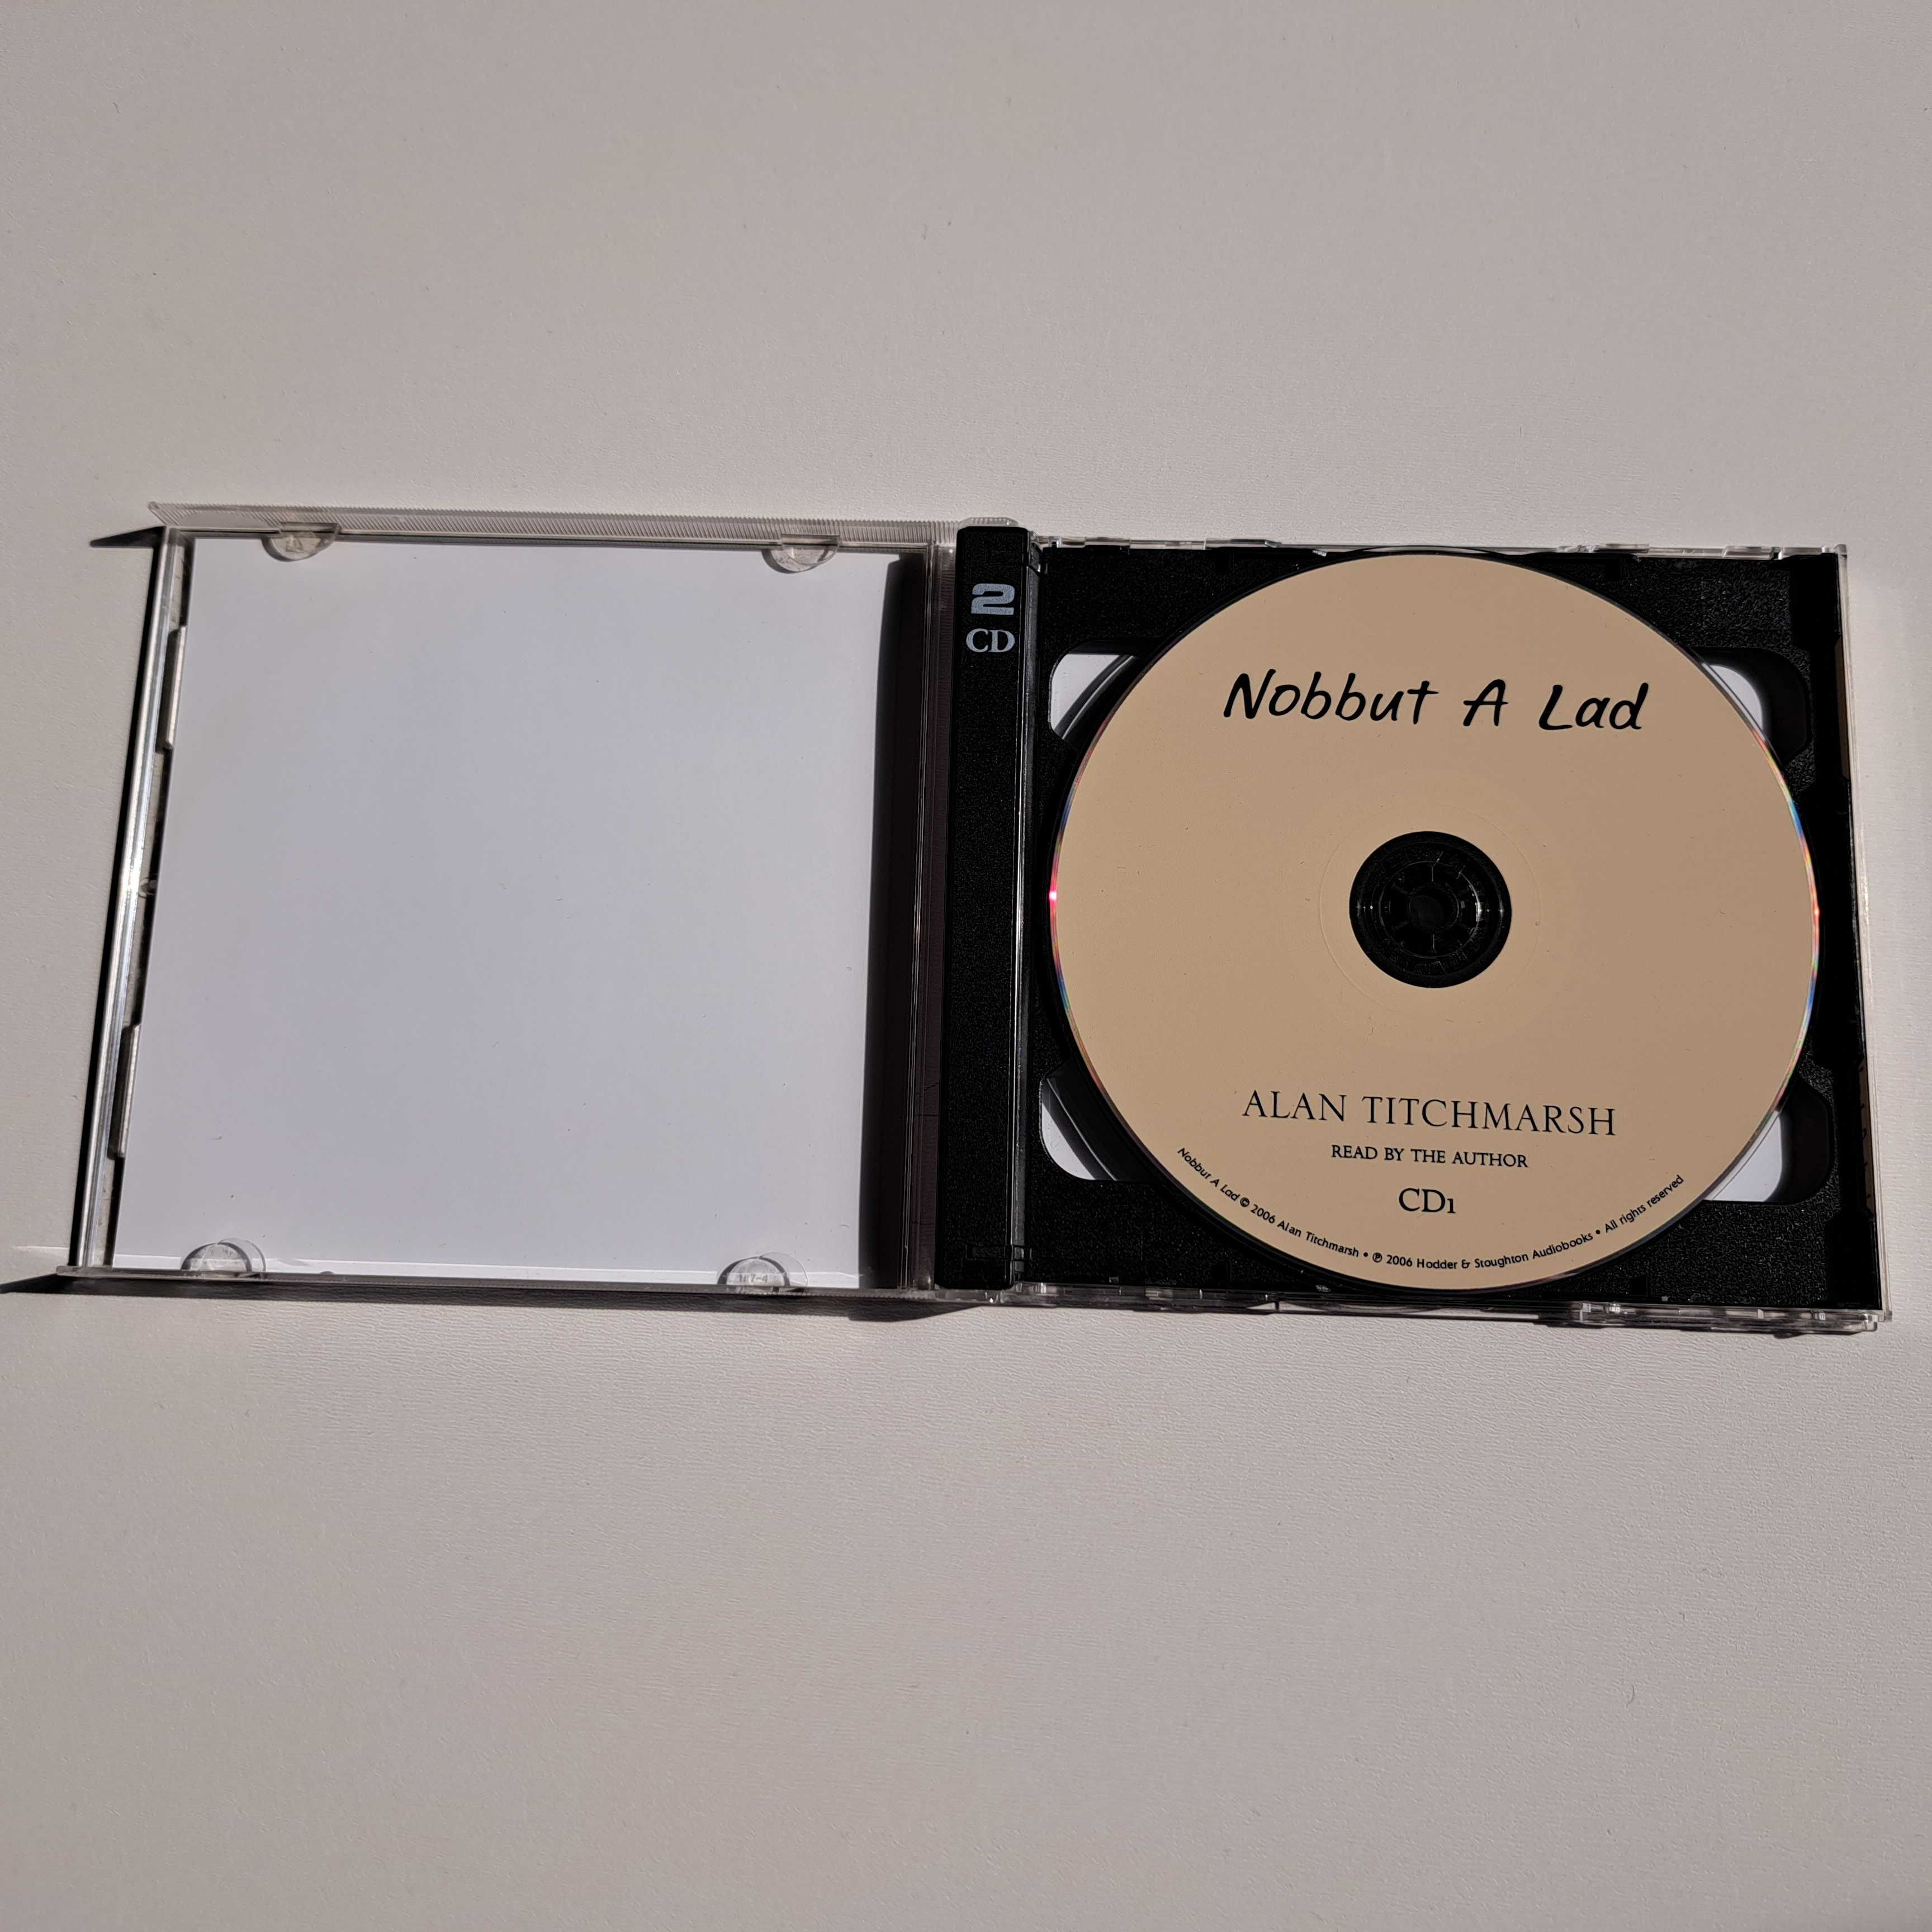 Płyta CD  Alan Titchmarsh - Nobbut A Load 2CD  nr360